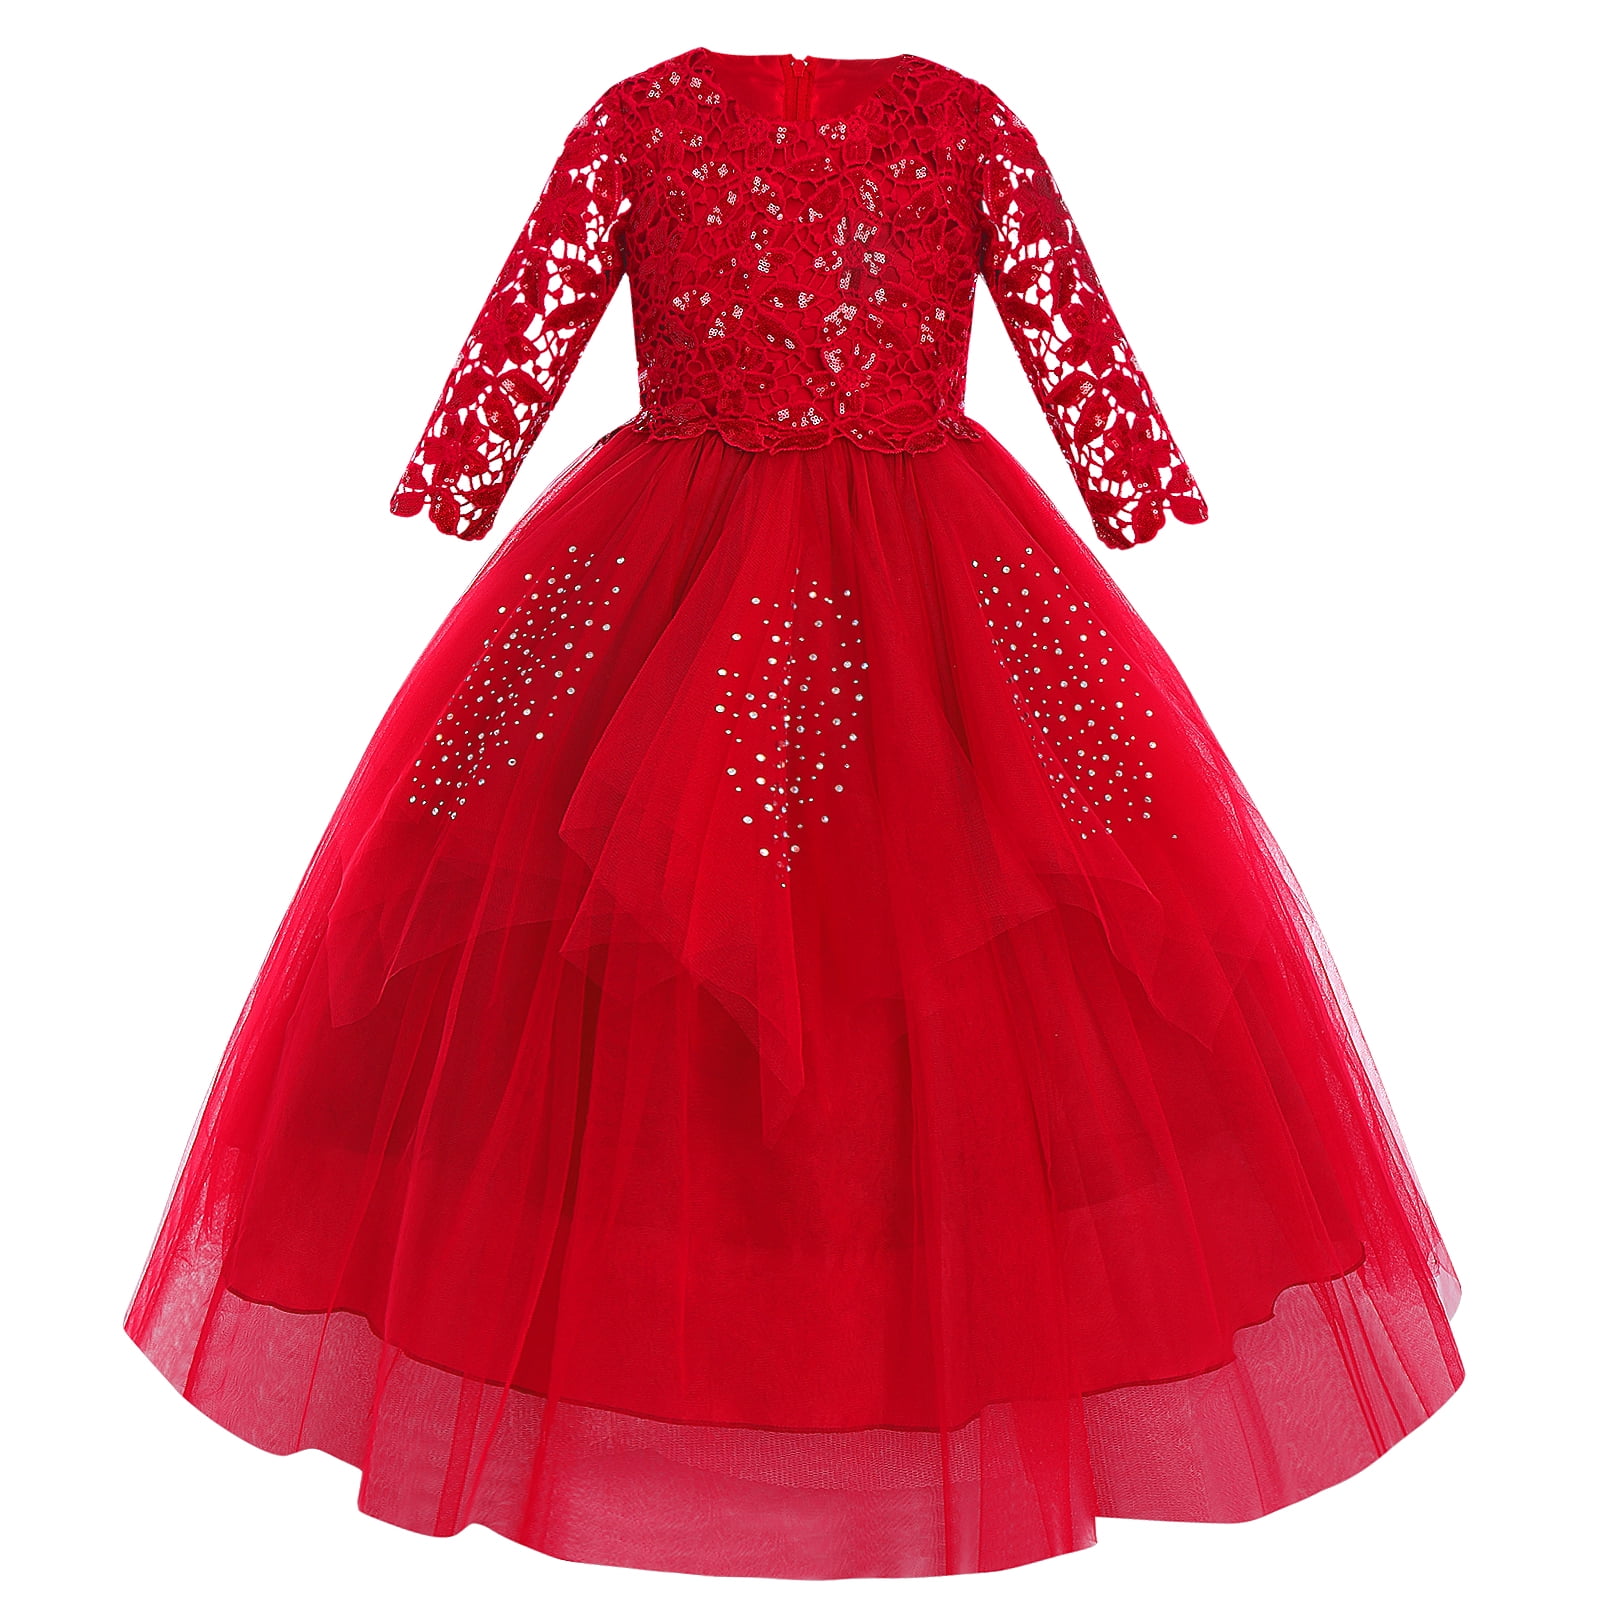 Robes Red Wine|red Sequin Ball Gown Flower Girl Dress - V-neck Sleeveless  Tulle For Graduation